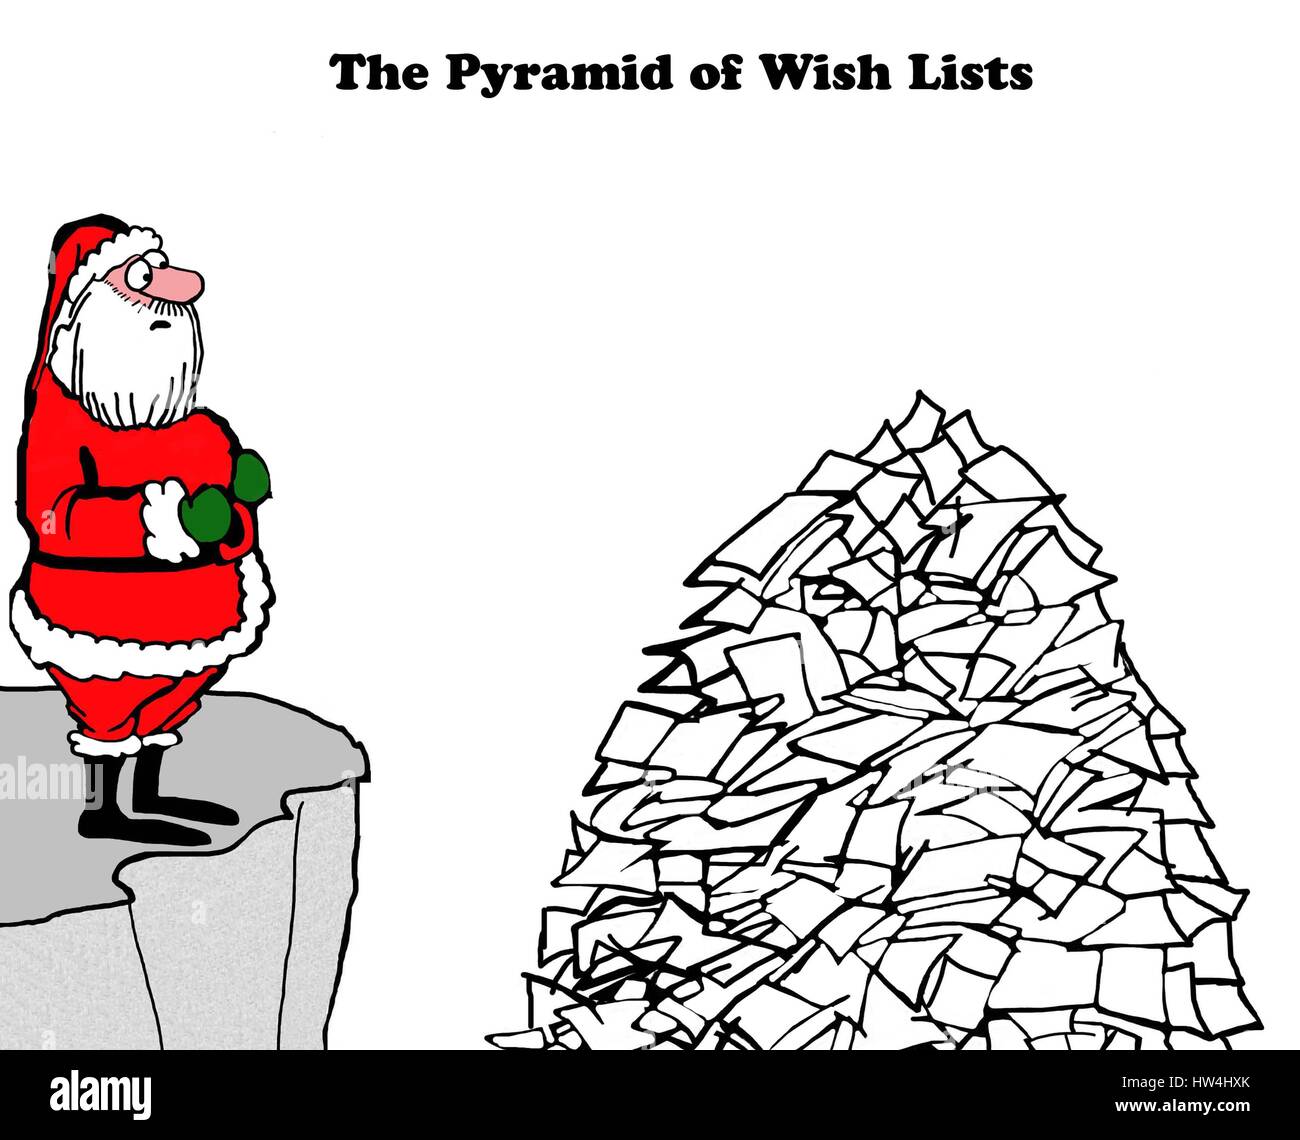 Christmas illustration of Santa Claus looking at a huge pyramid of wish lists. Stock Photo